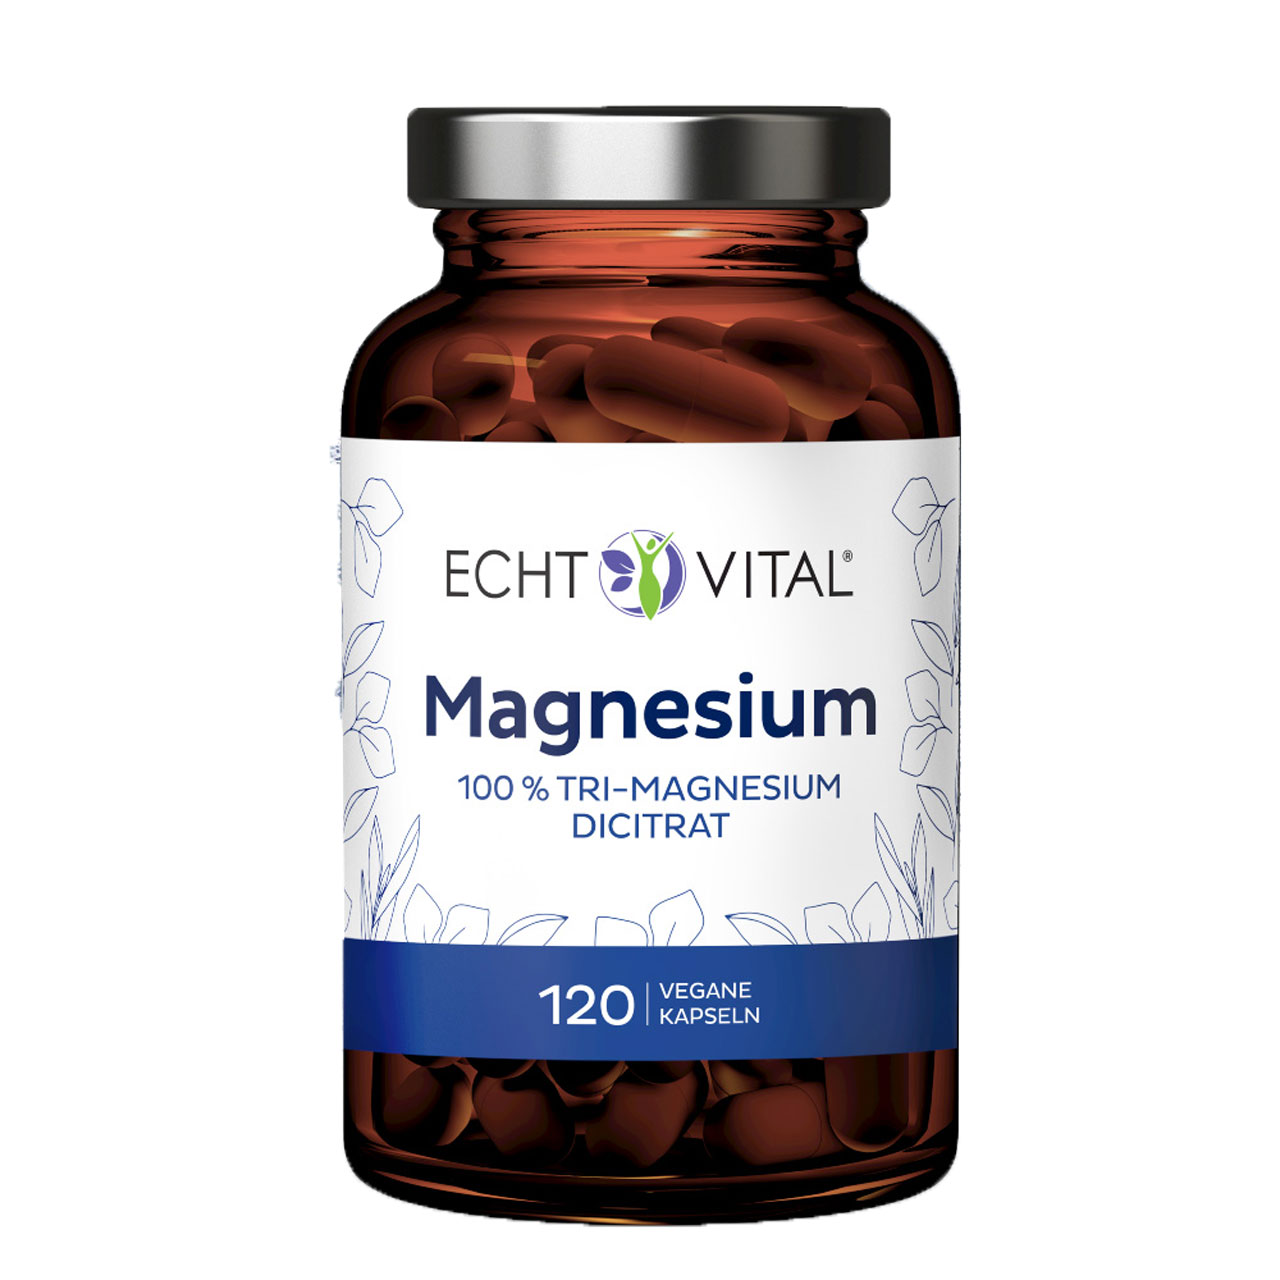 Magnesium Dicitrat Kapseln von Echt Vital beinhaltet 120 vegane Kapseln